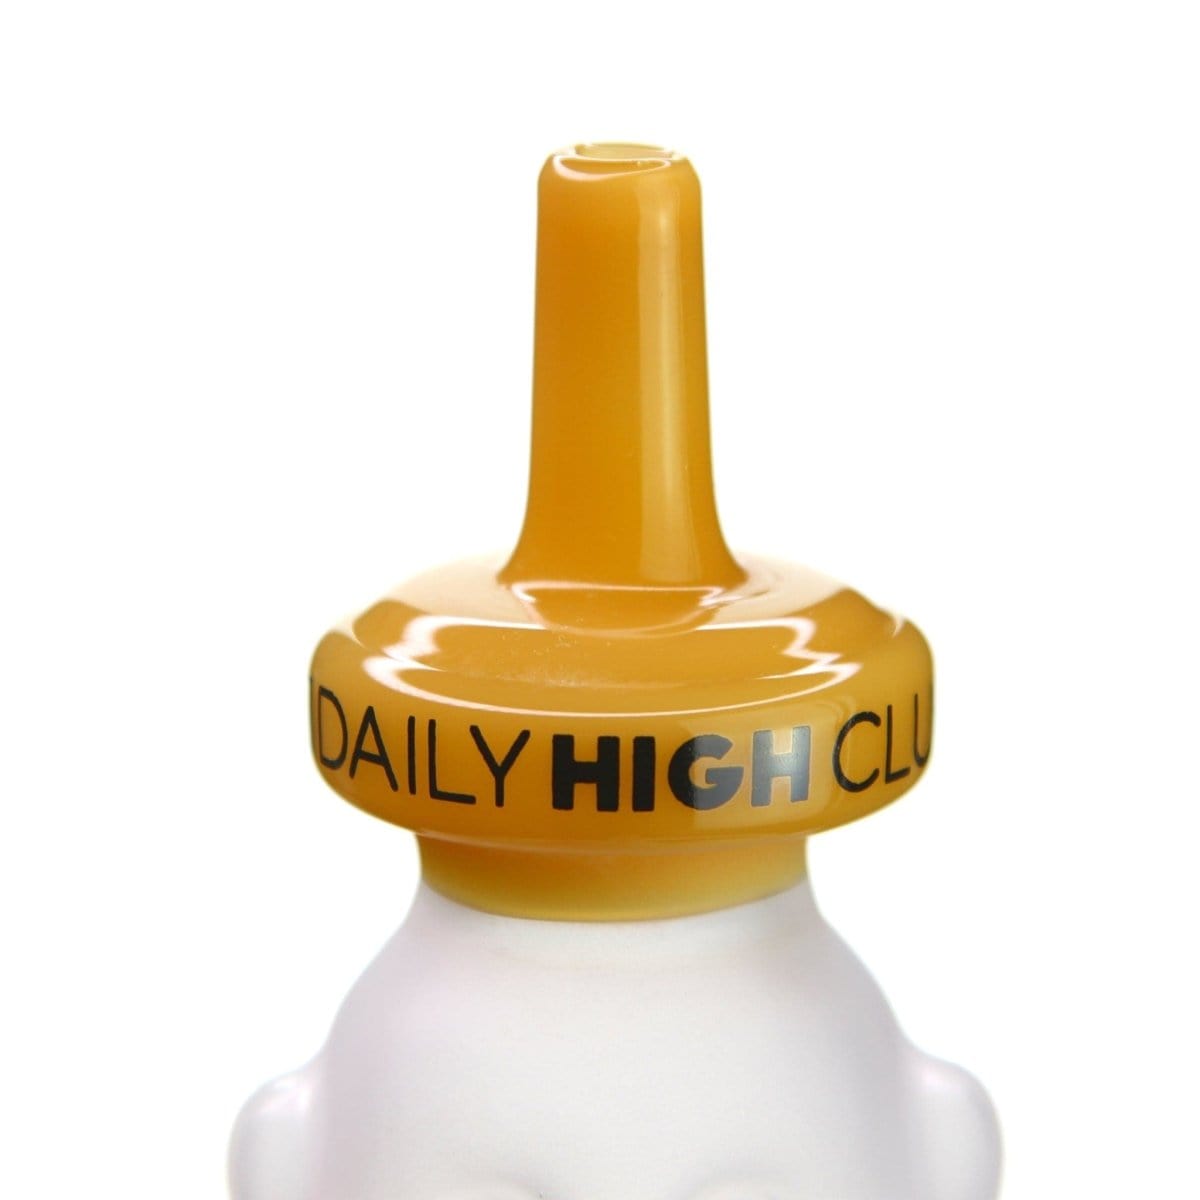 Daily High Club Glass Daily High Club 